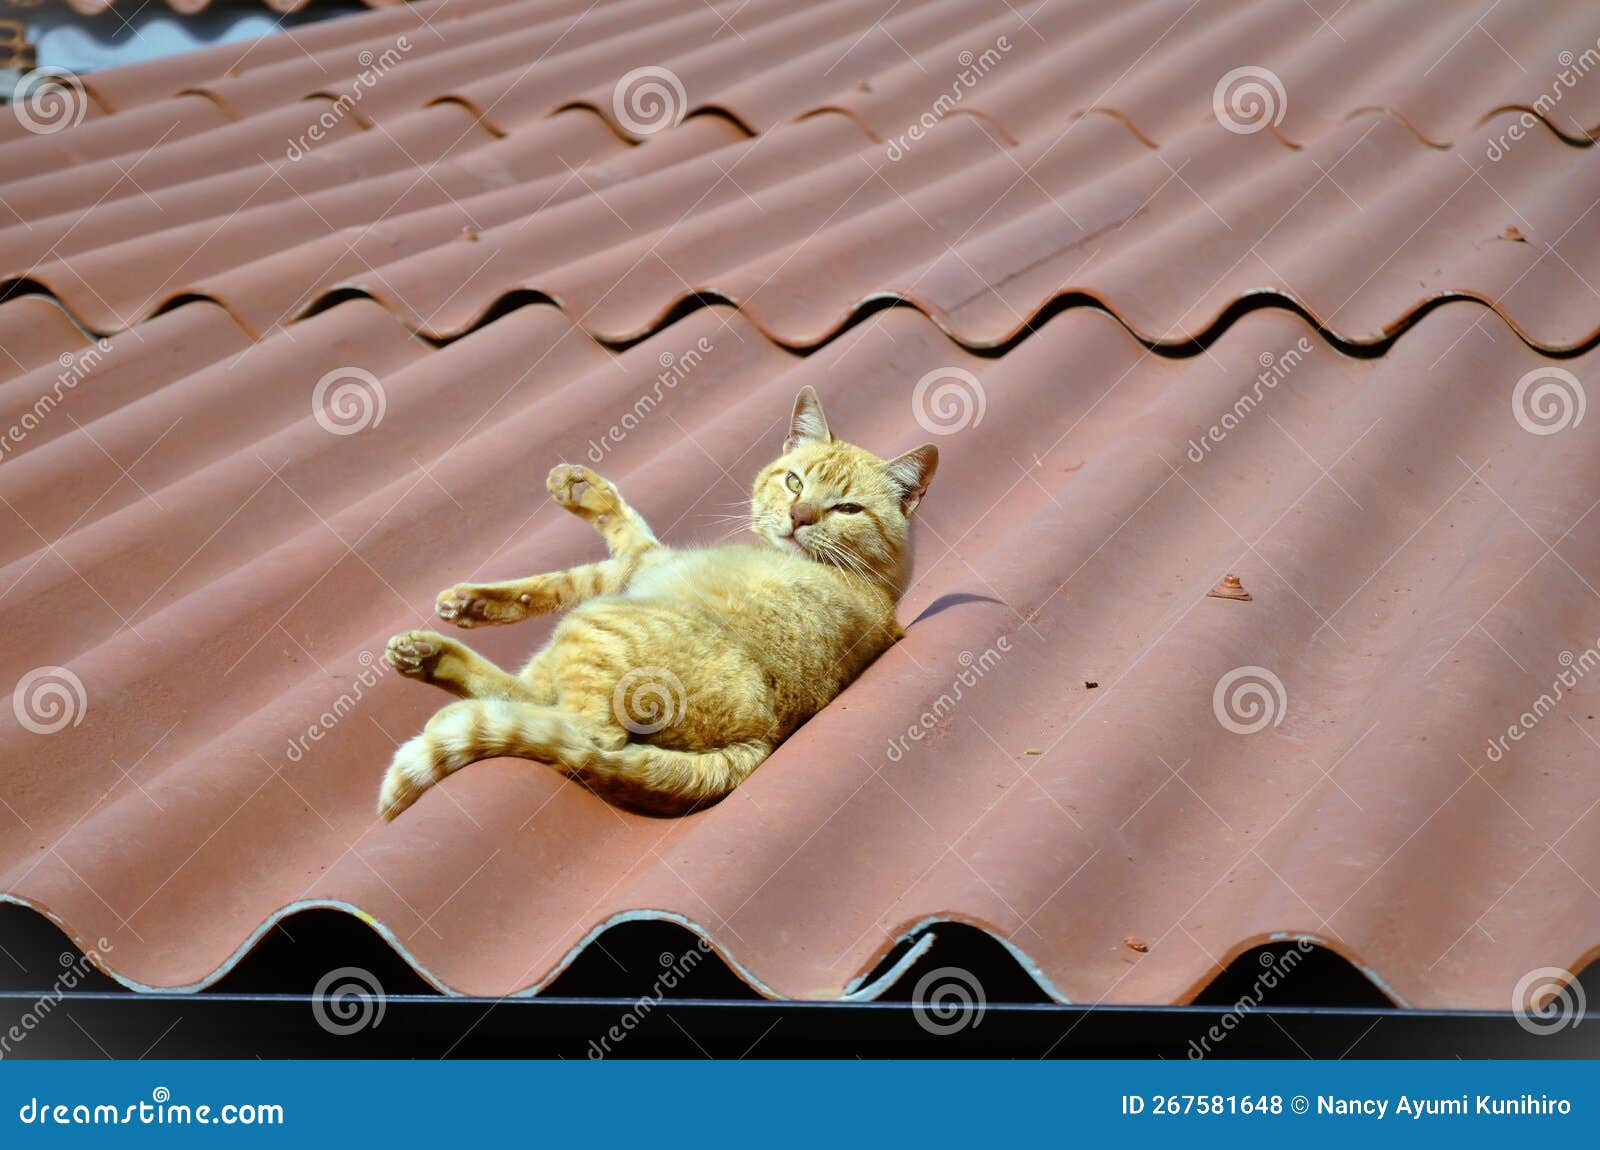 look of the orange felis catus cat lying quietly on the roof